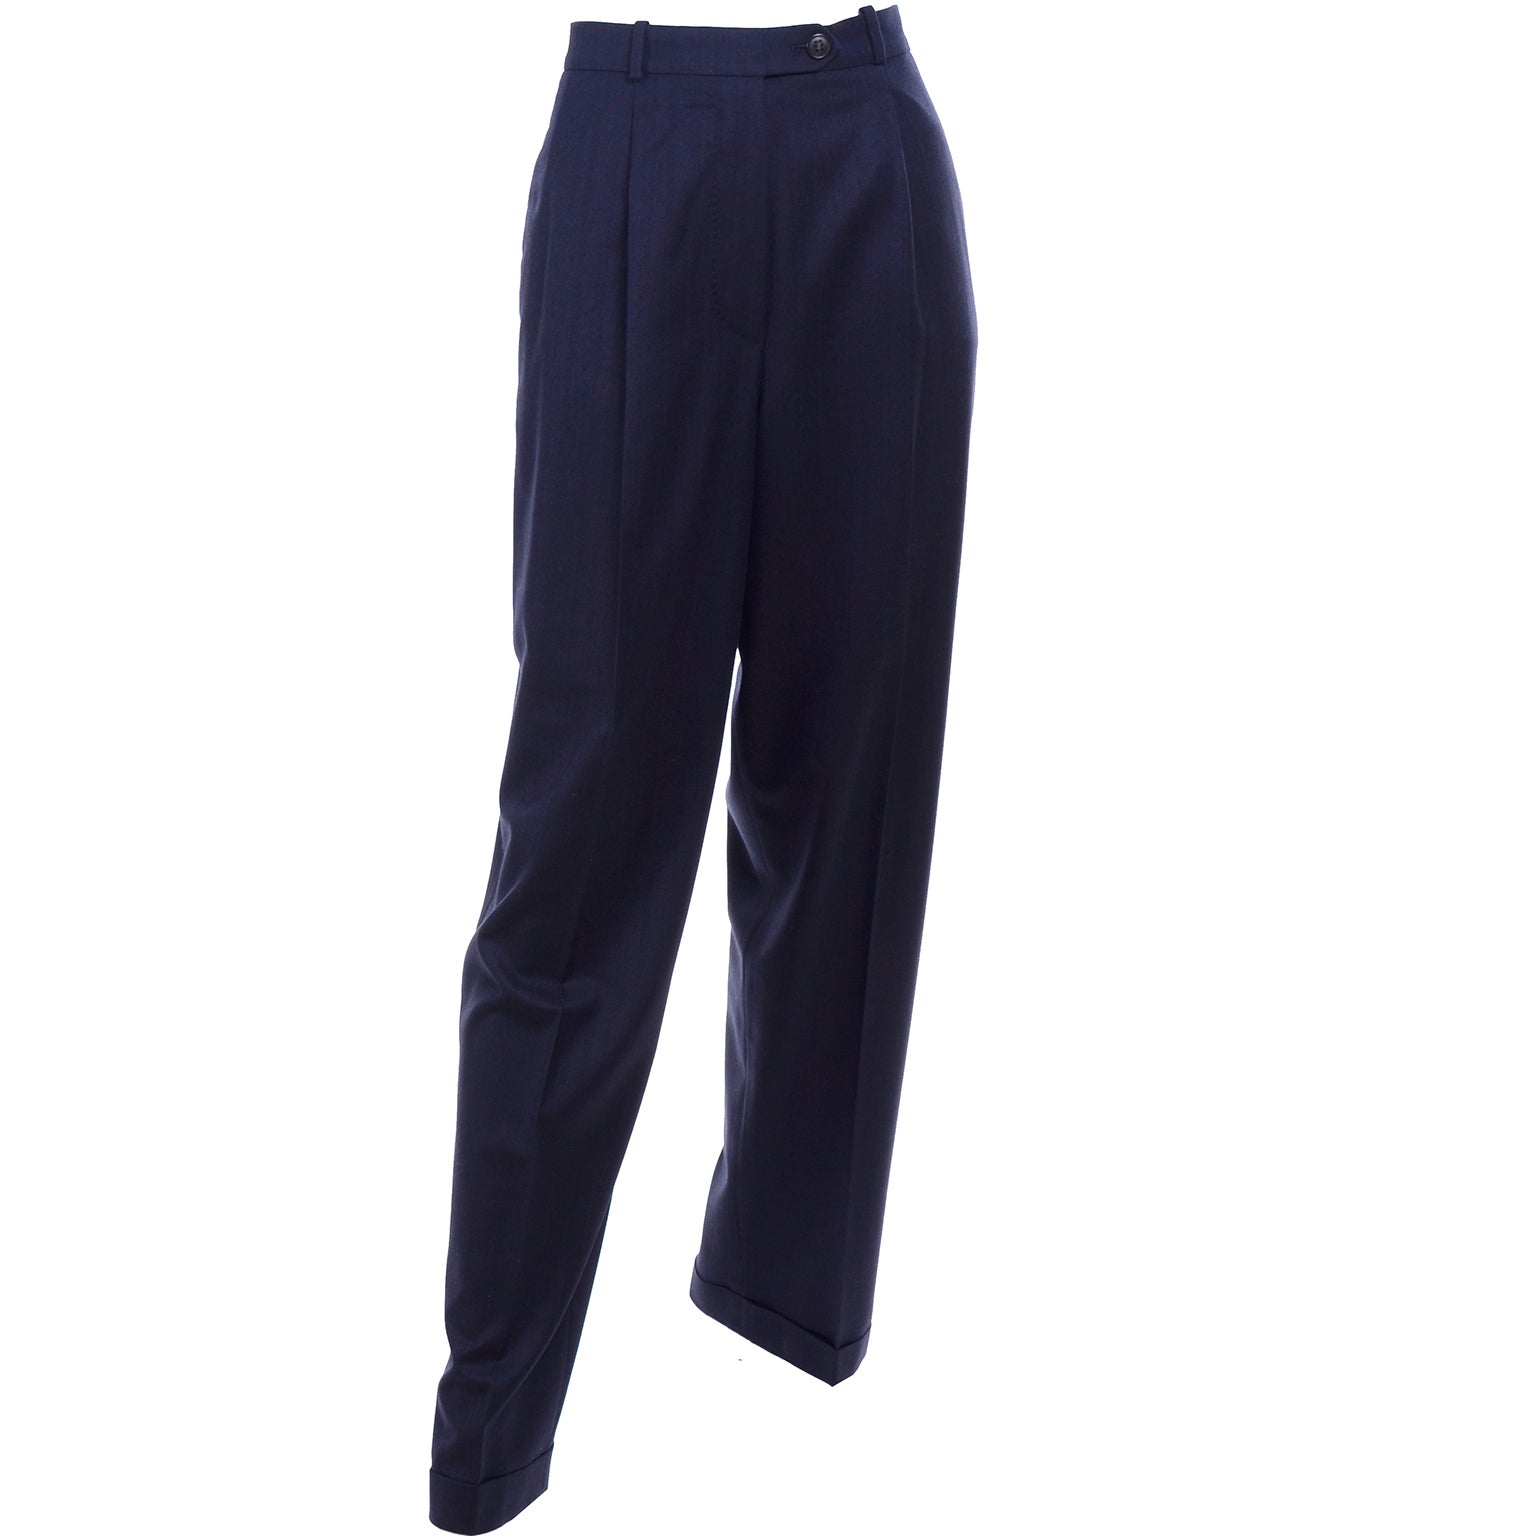 navy blue high waisted pants